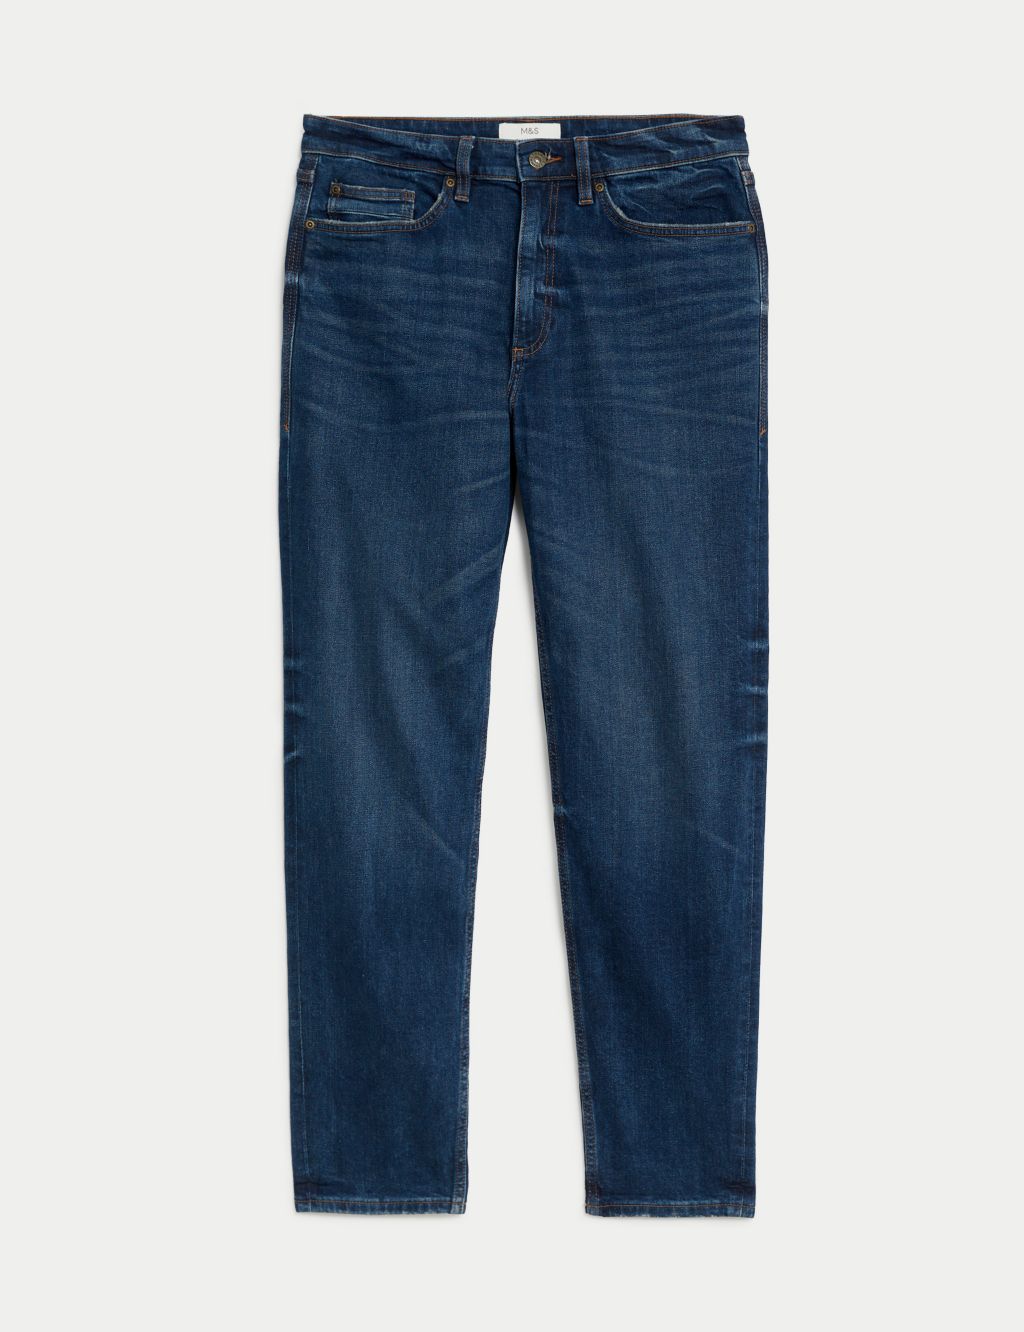 Tapered Fit Vintage Wash Stretch Jeans image 2